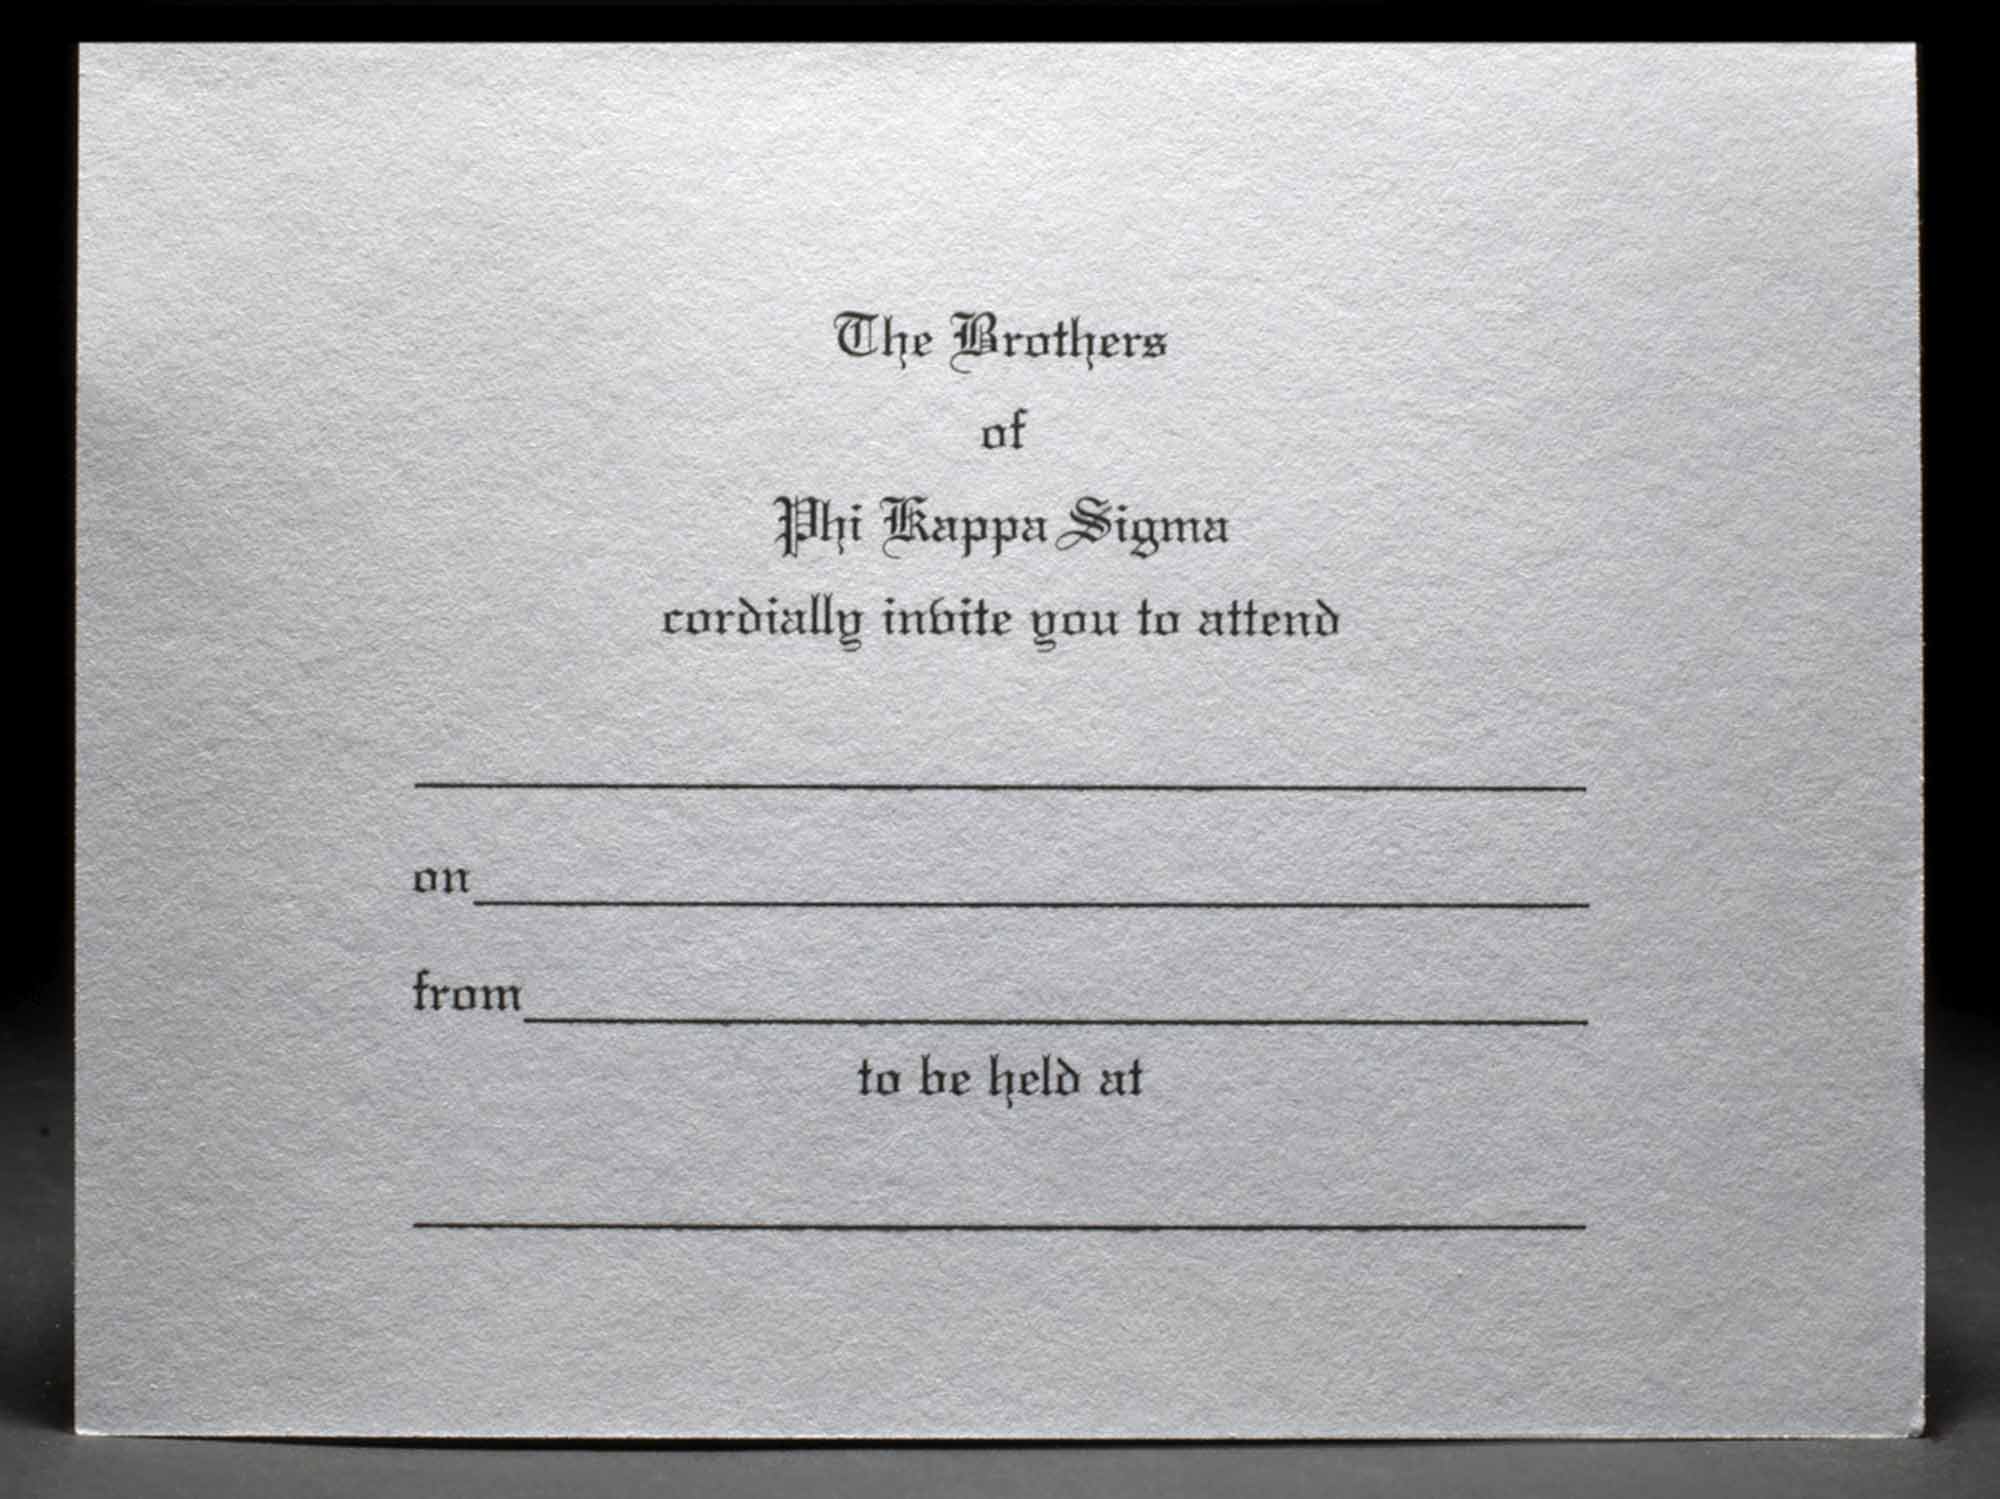 Formal Invitations Phi Kappa Sigma